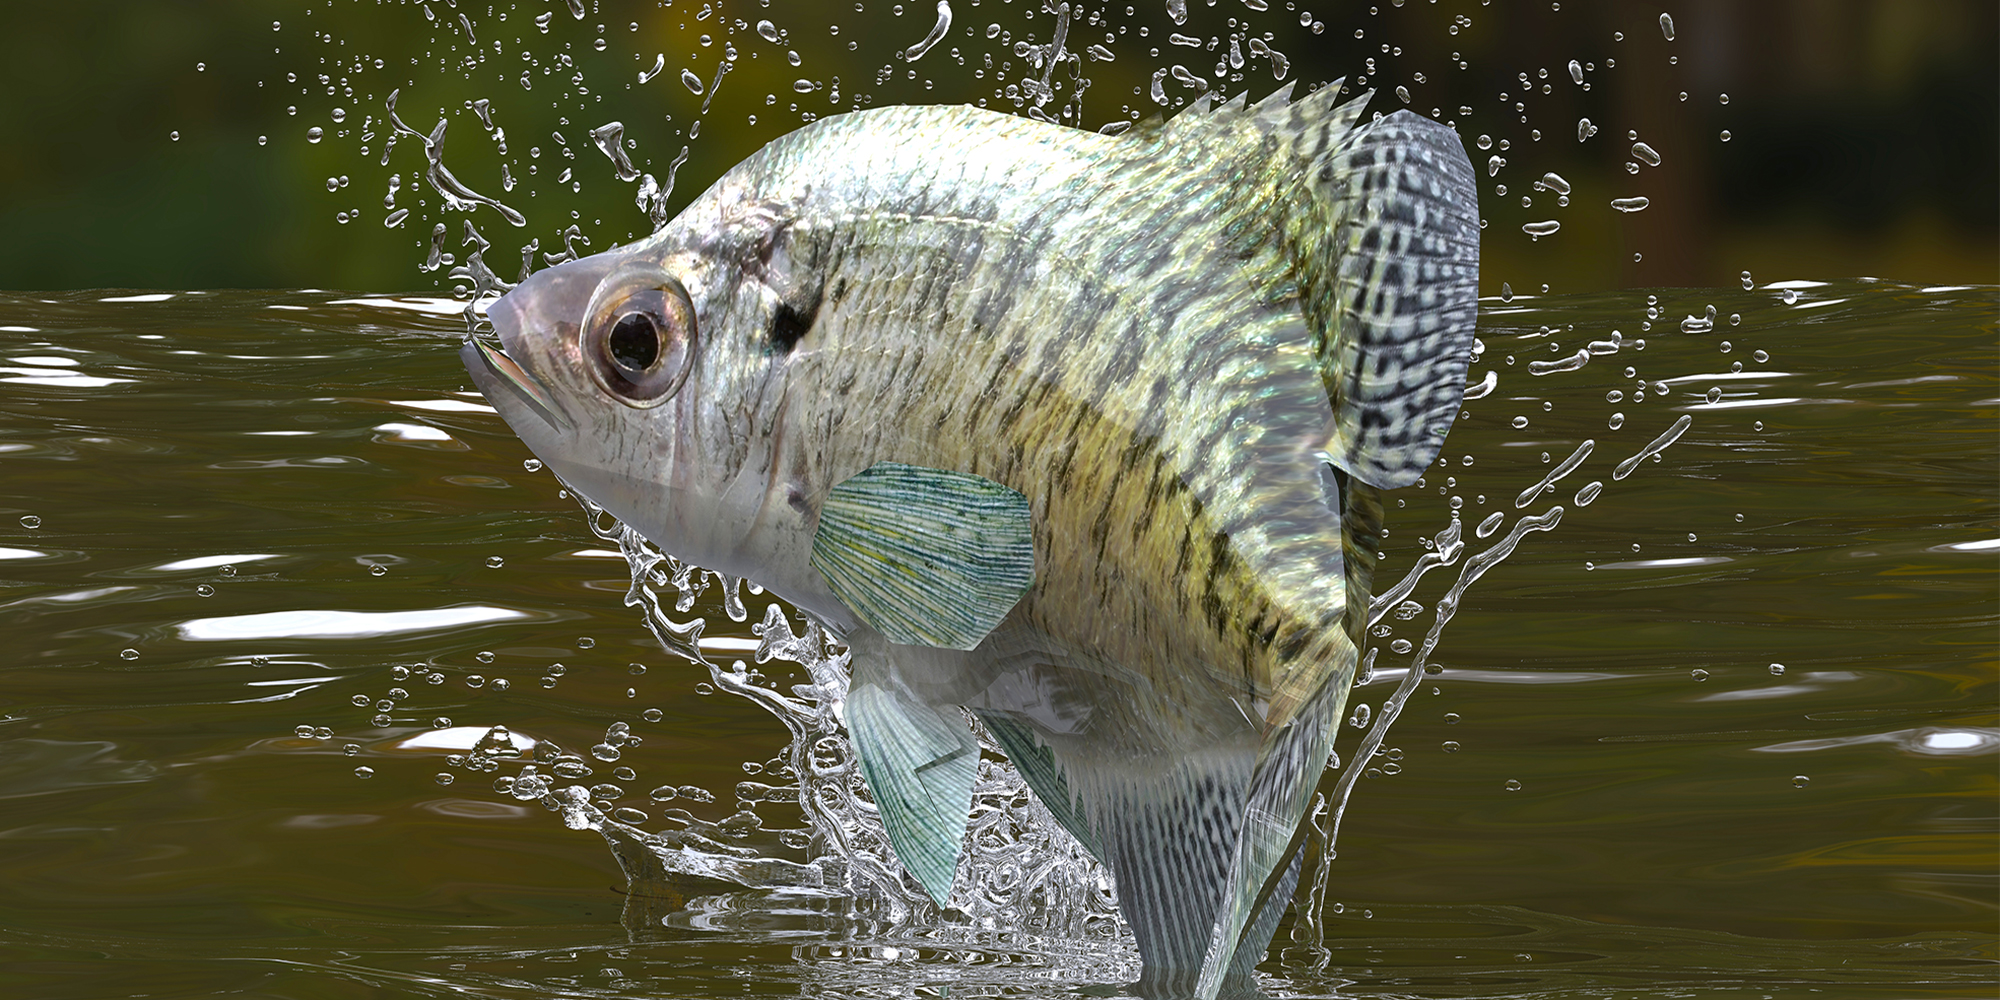 https://majorleaguefishing.com/wp-content/uploads/2020/01/mark-davis-crappie-fishing.jpg